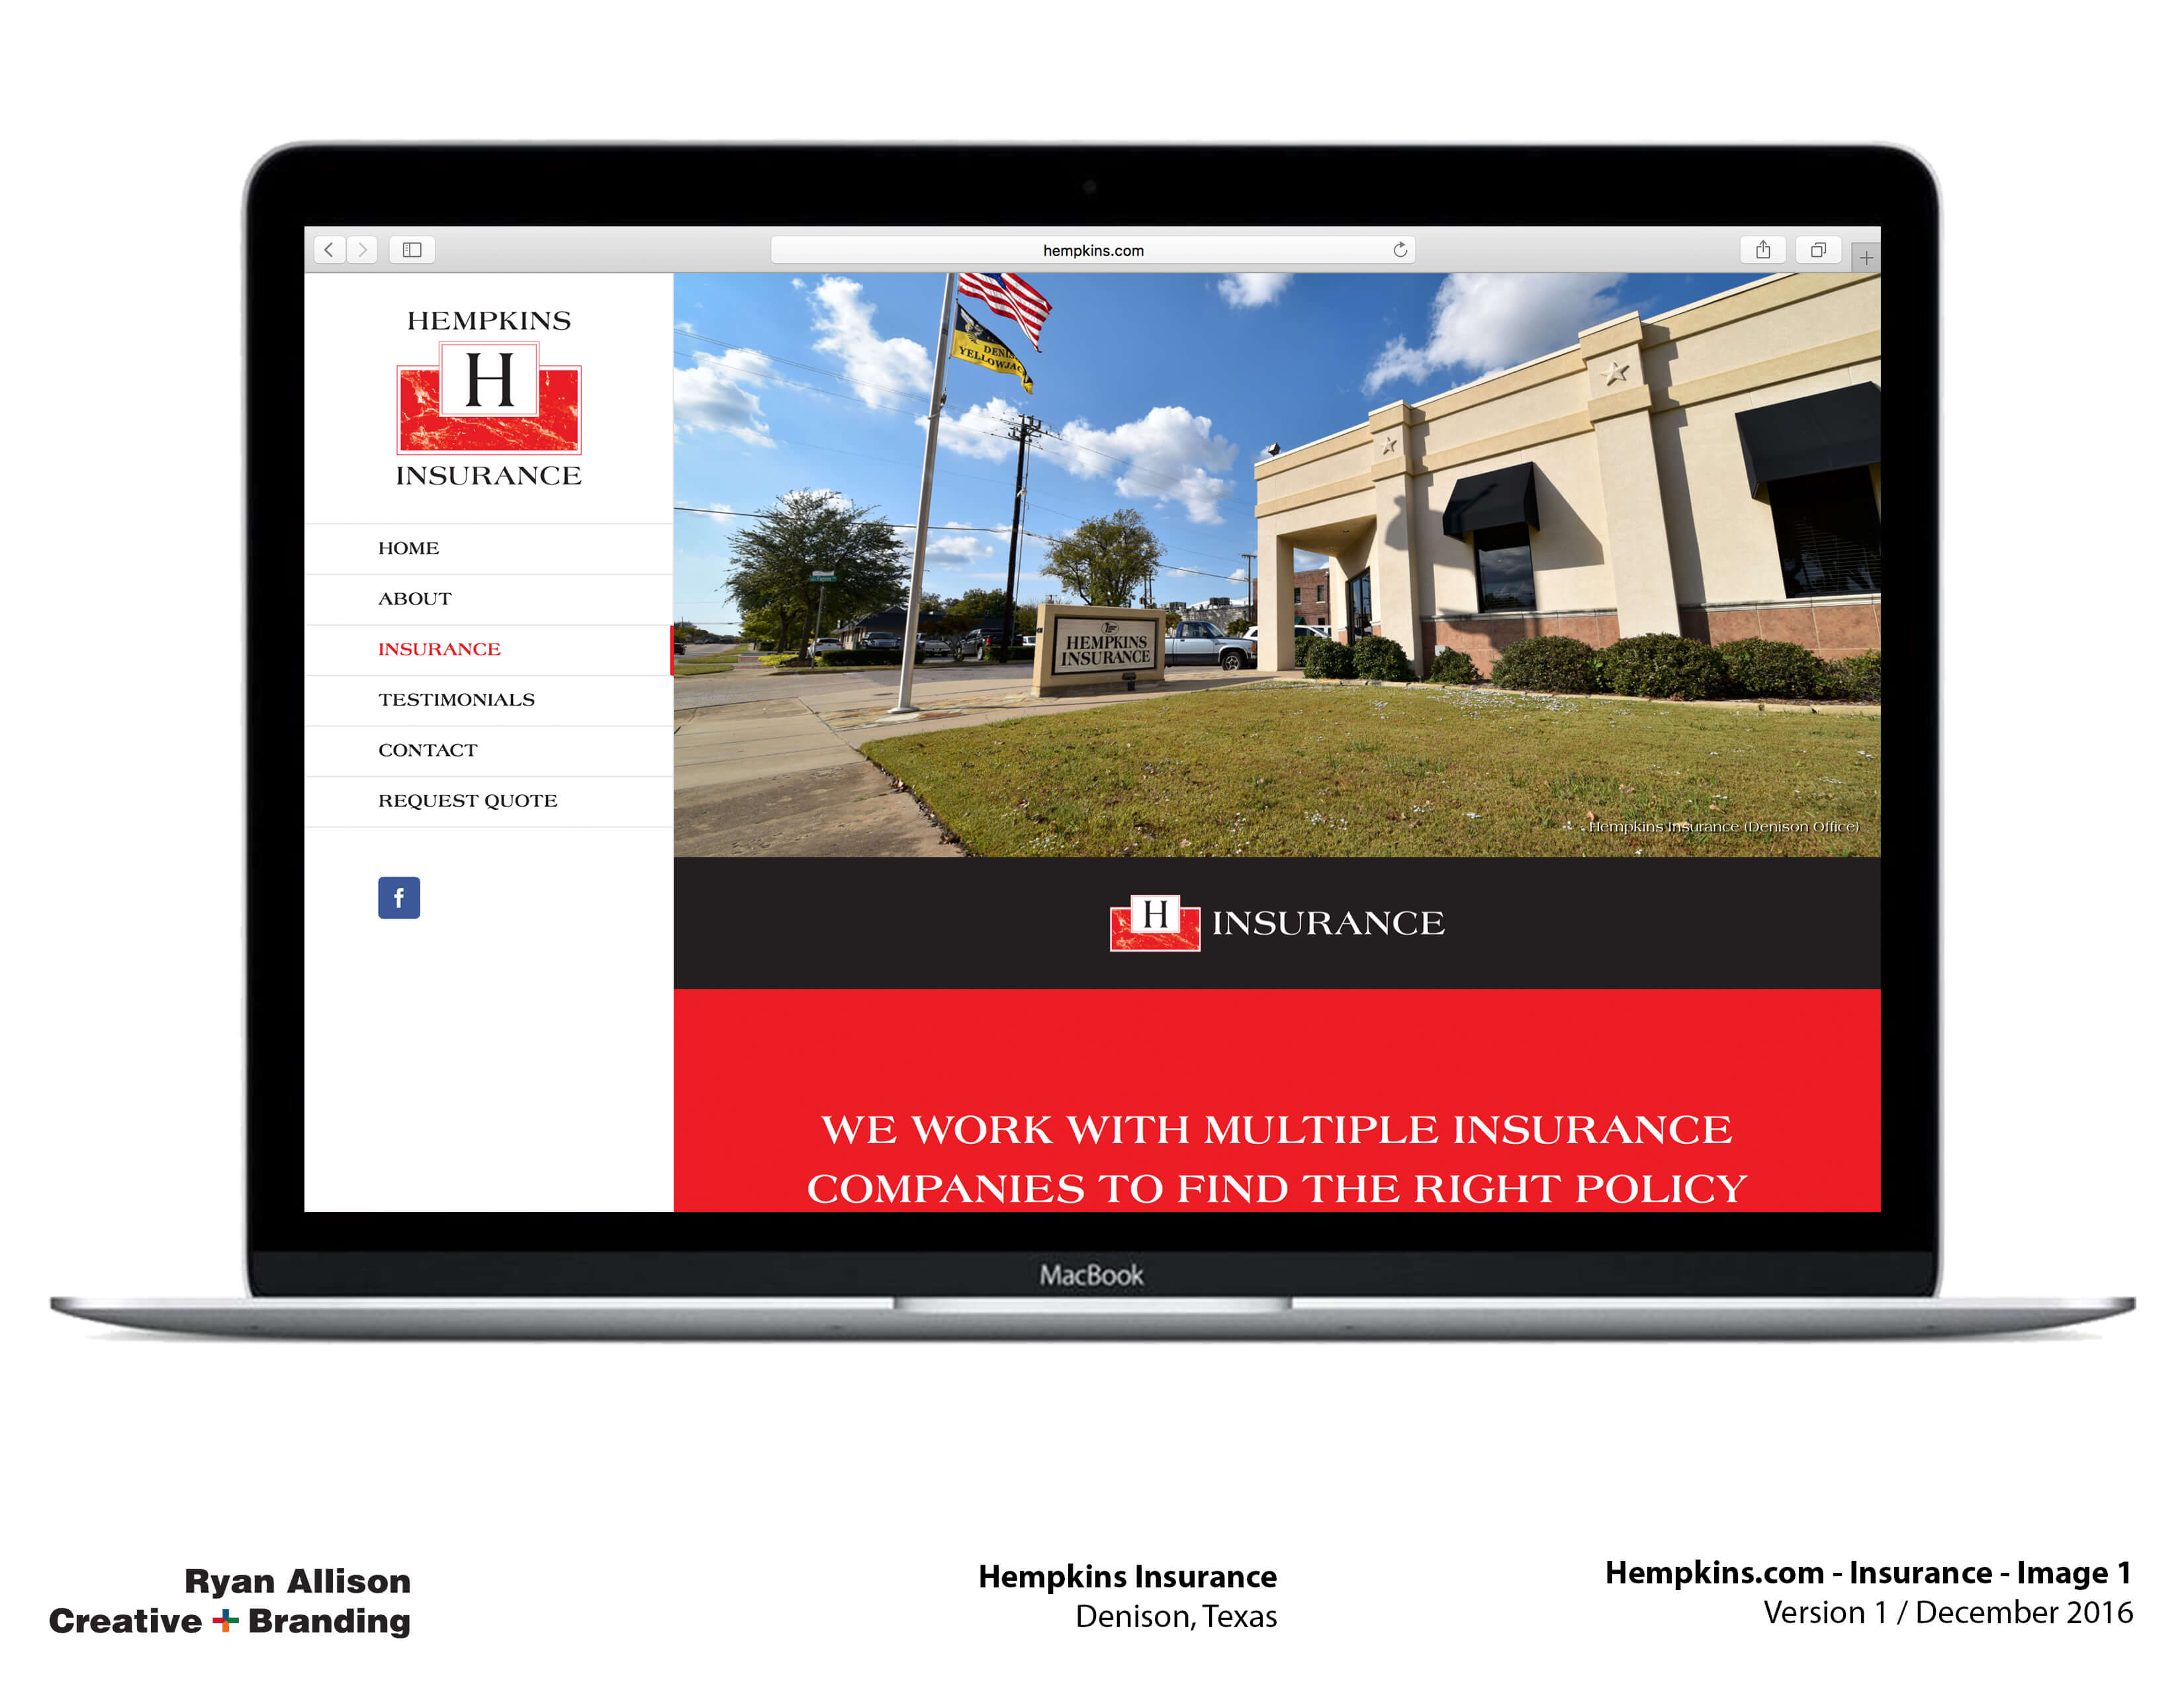 Hempkins Insurance Website Insurance 1 - Project - Ryan Allison Creative + Branding